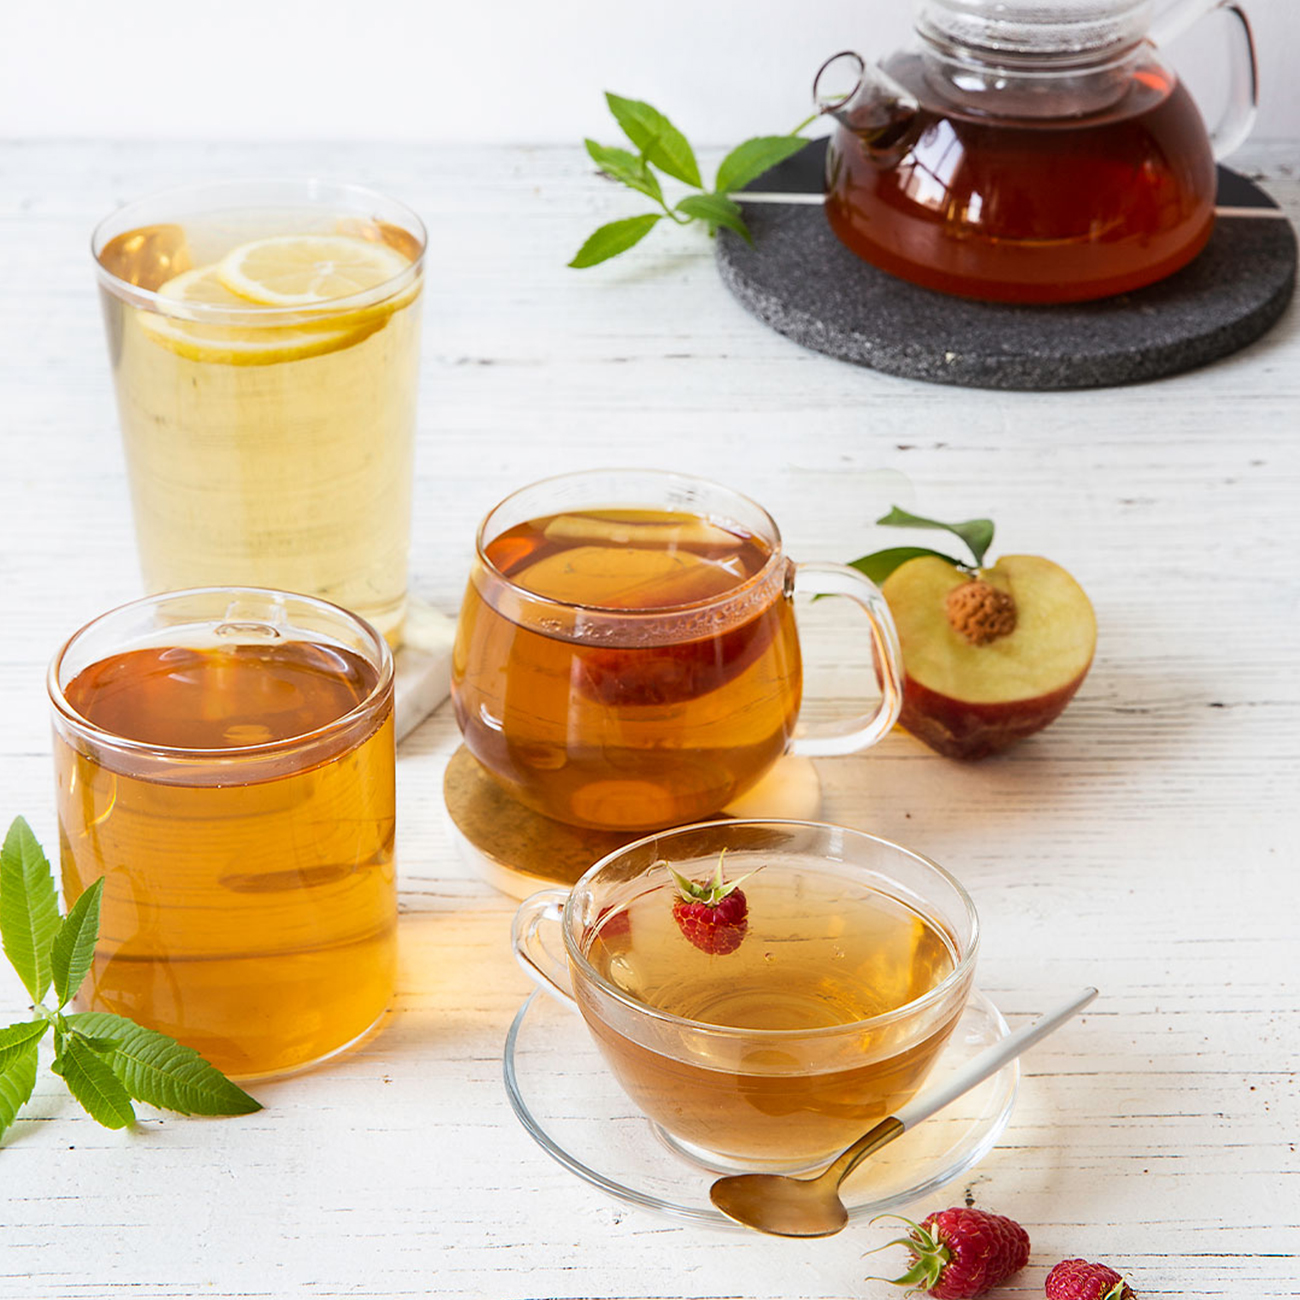 Kozarci čaja Herbalife Nutrition z okusom limone, maline oziroma breskve.